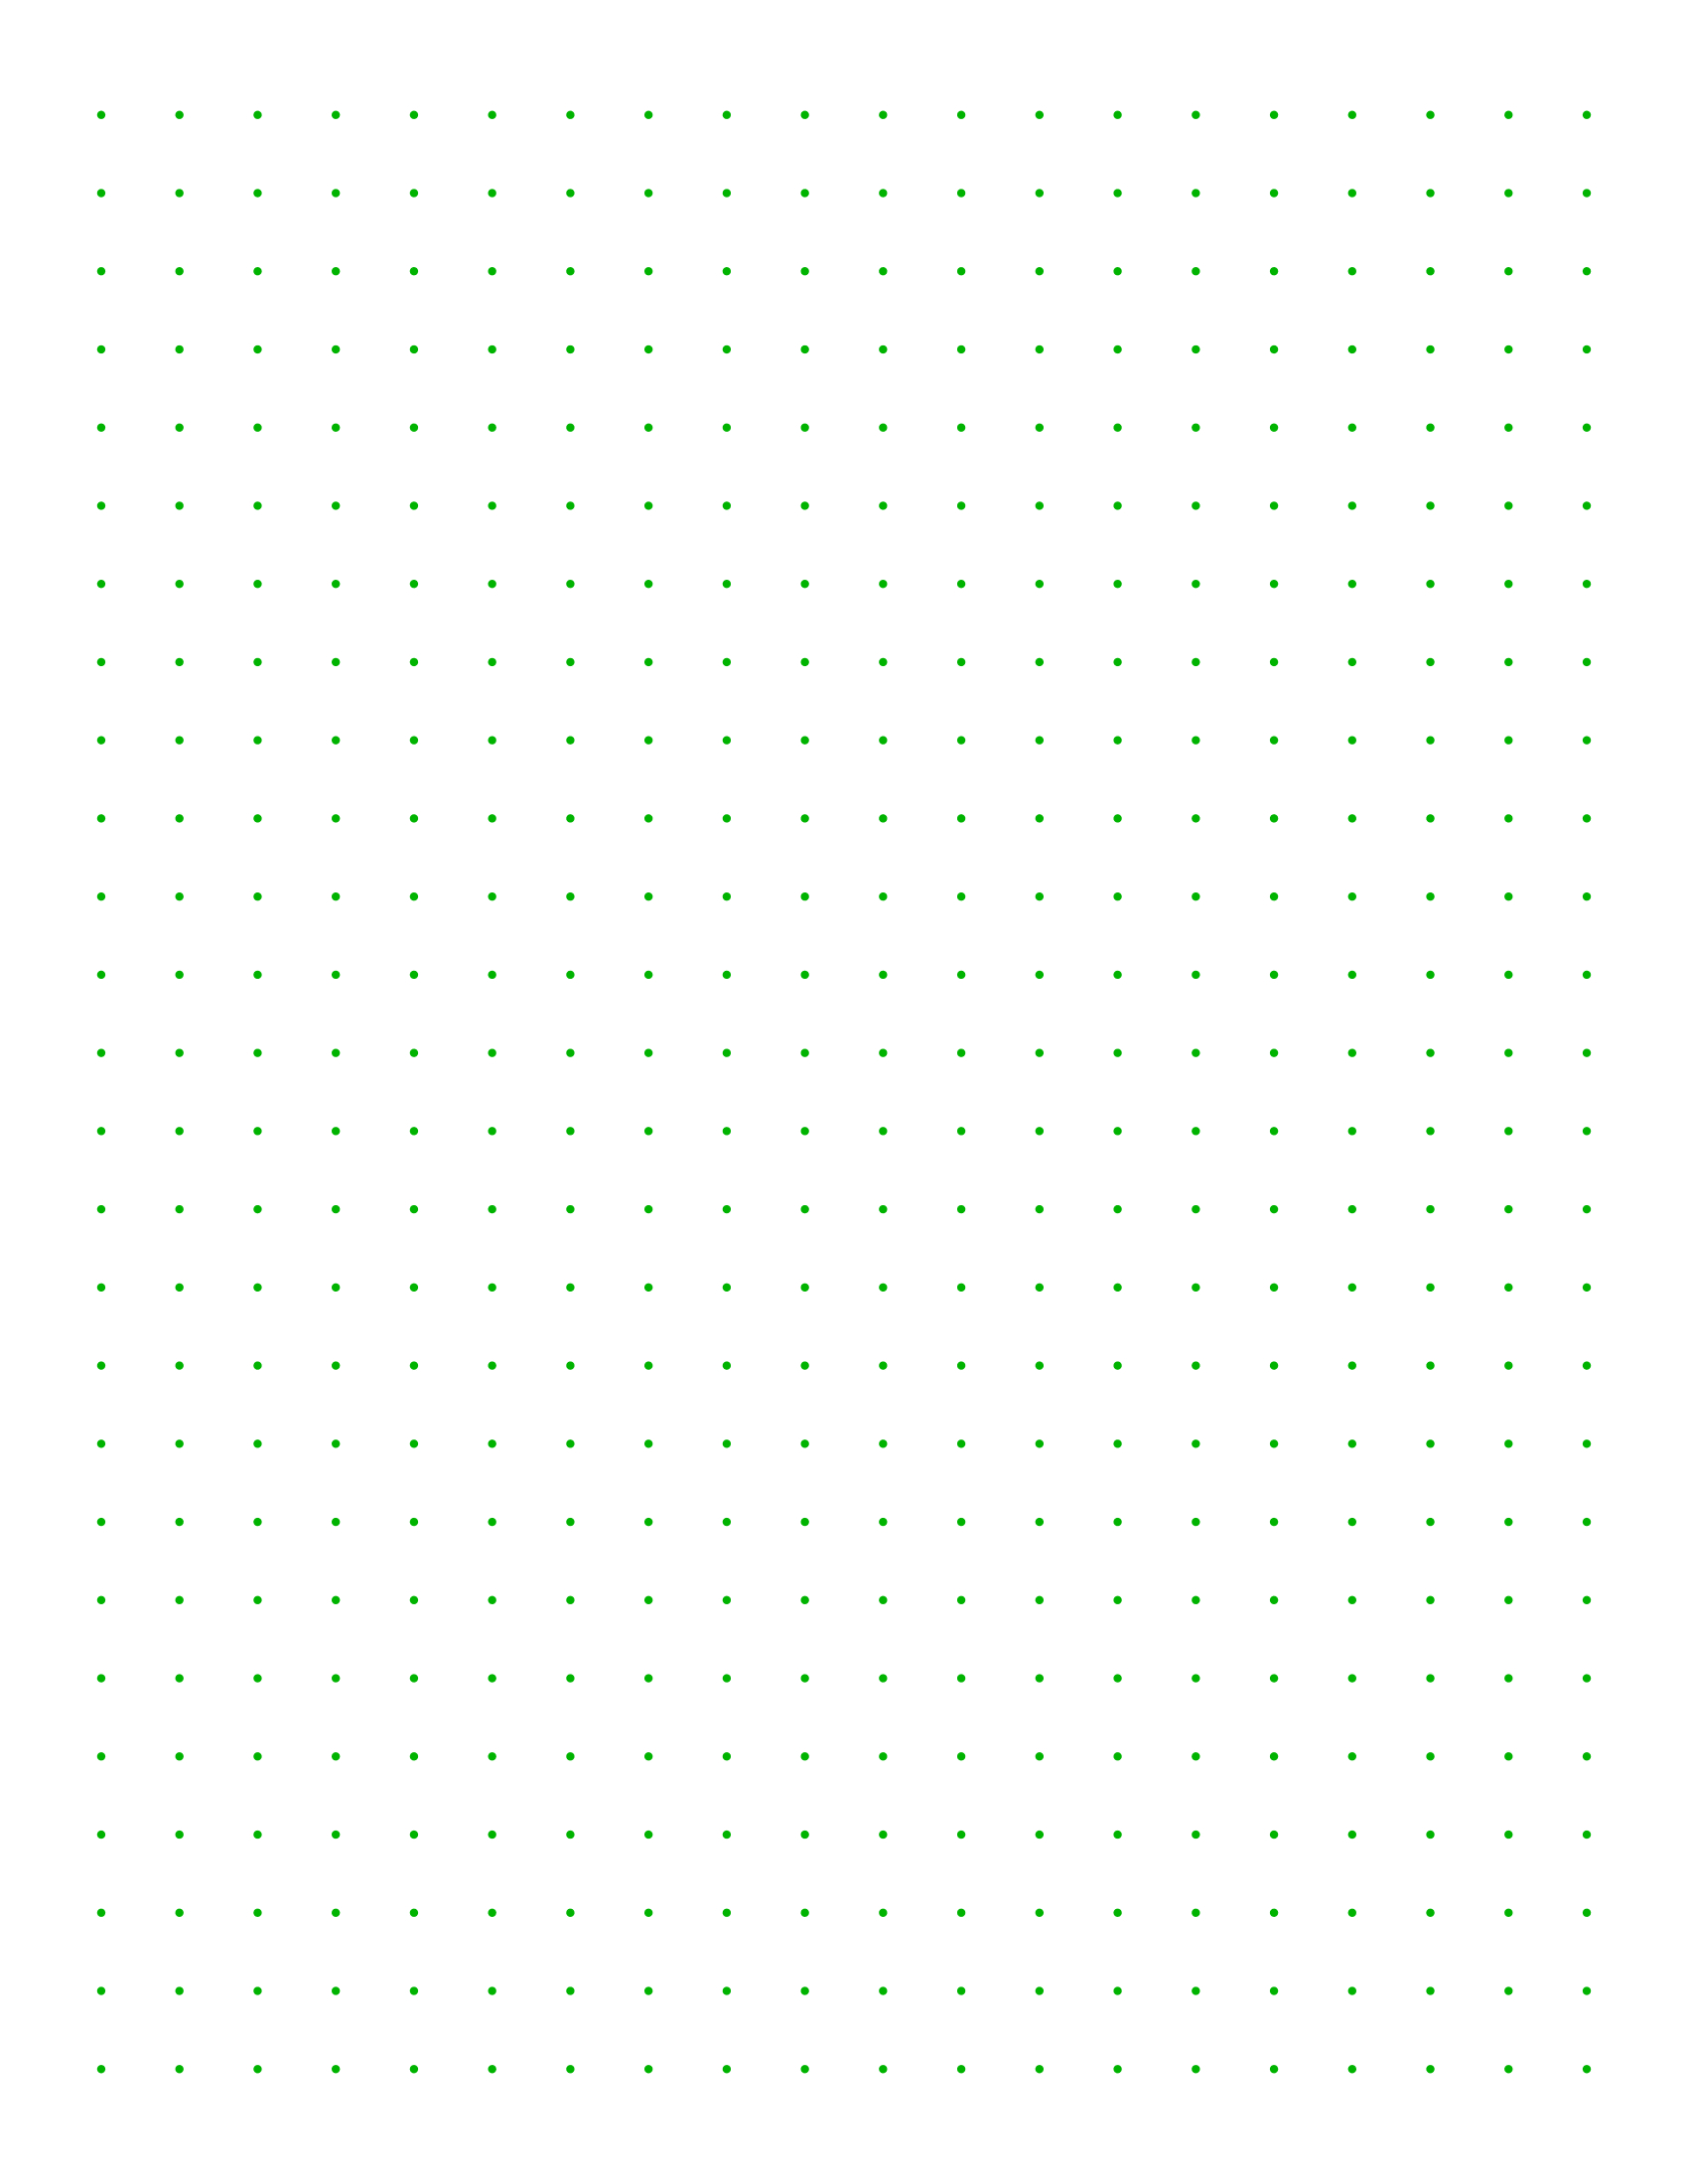 Free Online Graph Paper / Square Dots - Free Printable Square Dot Paper